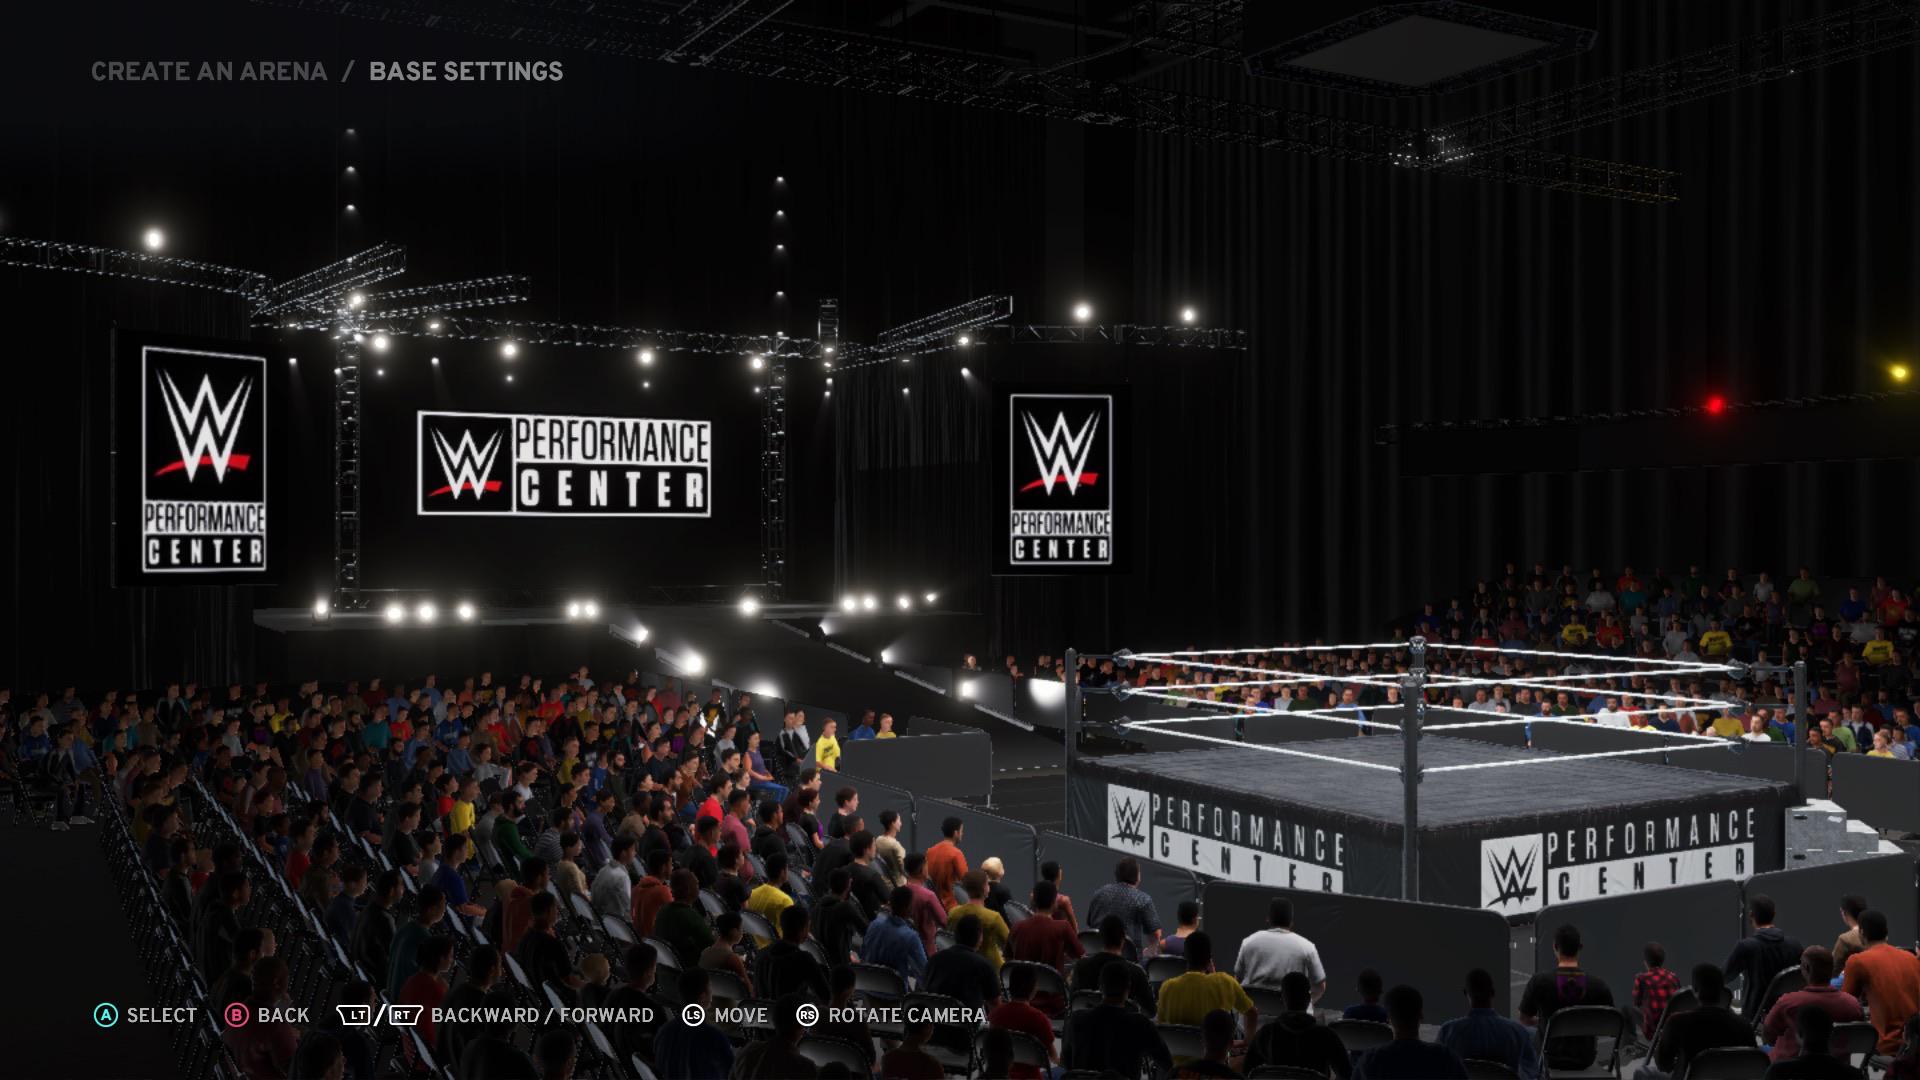 WWE Performance Center Arena : WWEGames